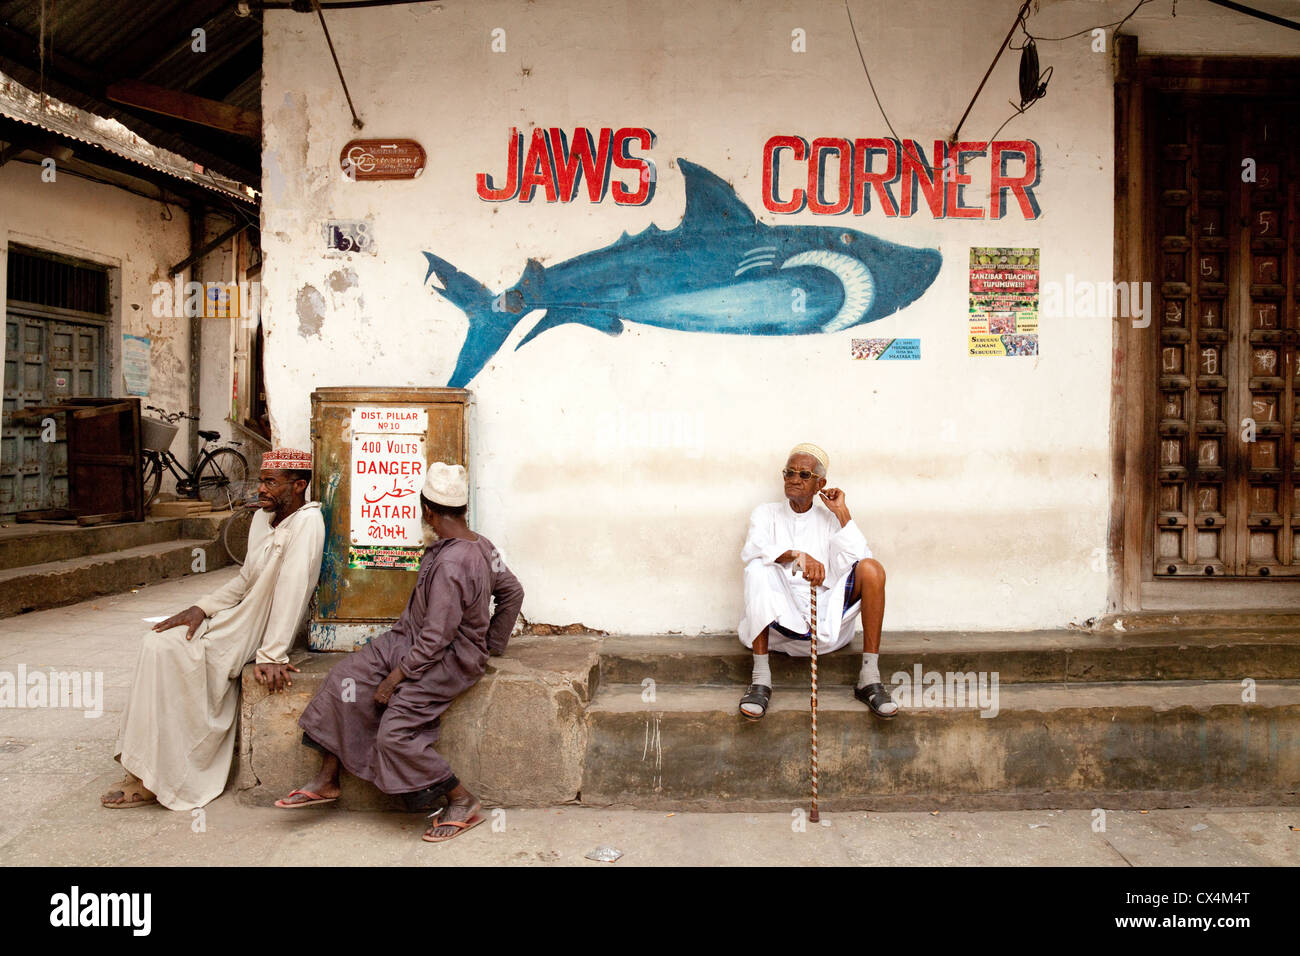 Local culture - people at Jaws Corner, where local people discuss politics, Stone Town, Zanzibar Tanzania Africa Stock Photo